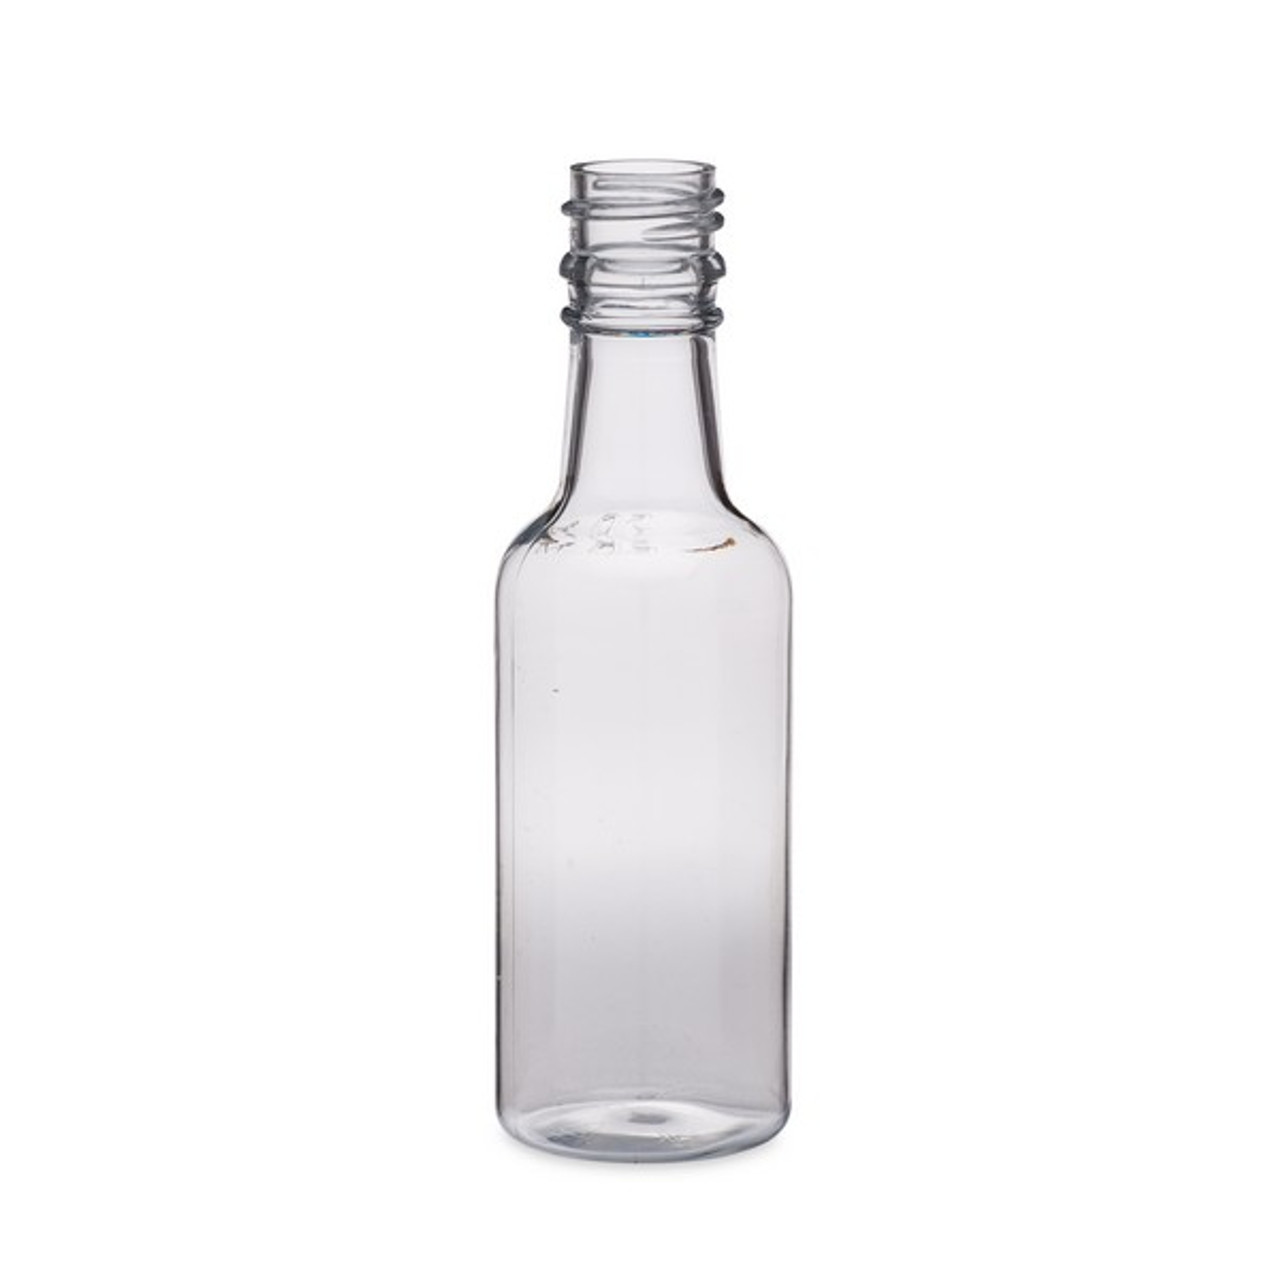 50 ml High Quality Plastic Miniature Spirit Bottles x 50 